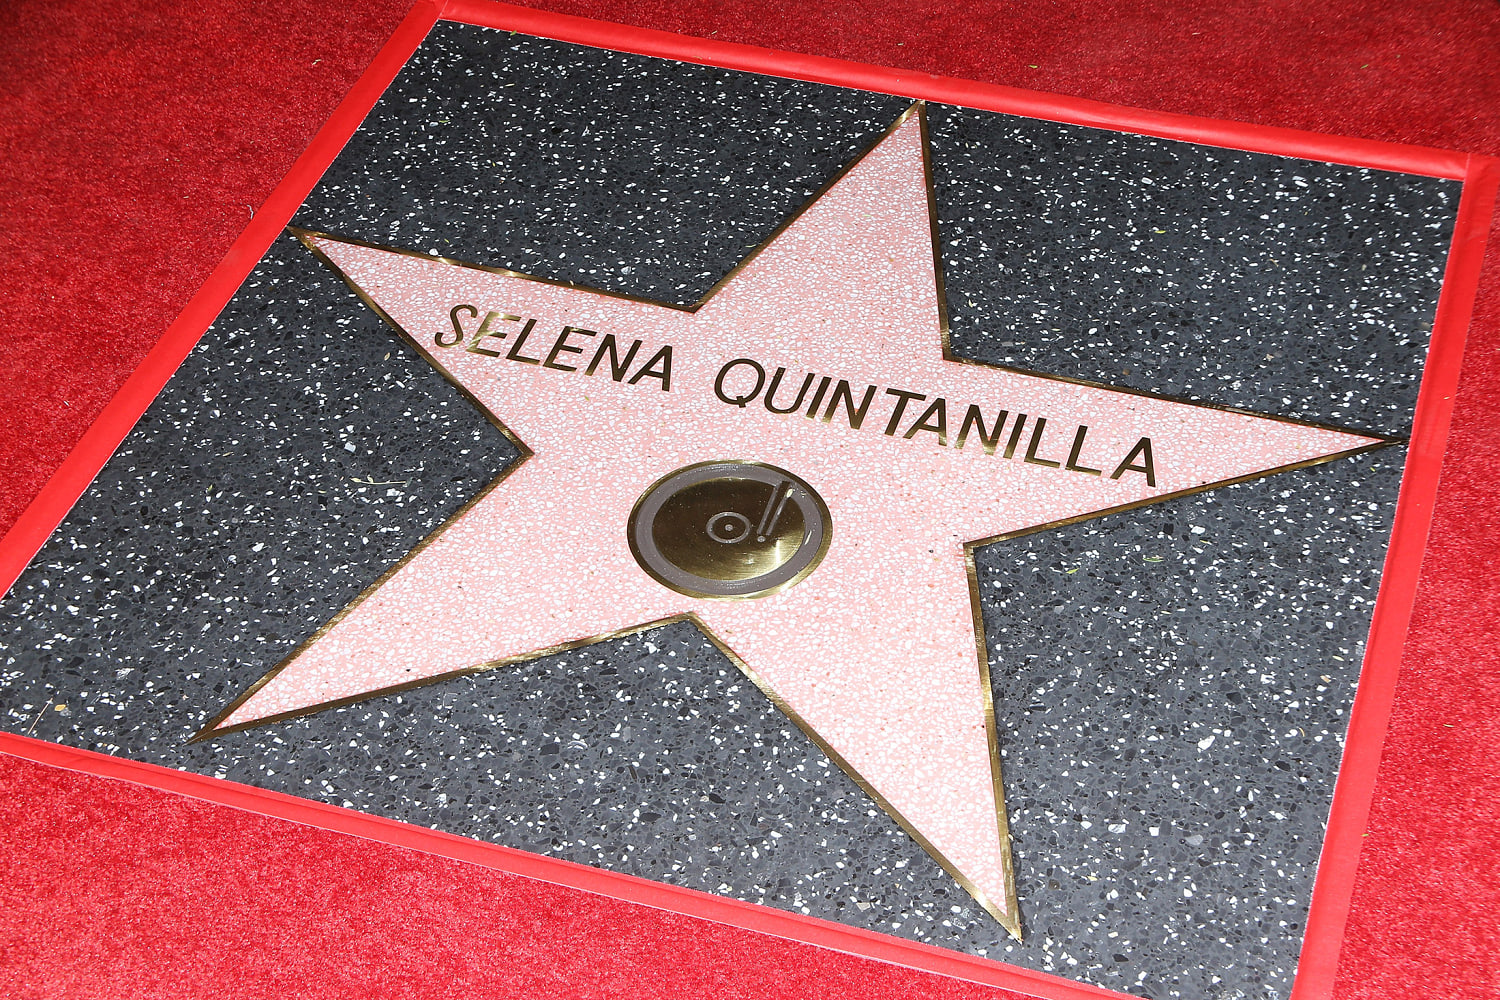 Selena’s and Jenni Rivera’s stars on the Hollywood Walk of Fame vandalized